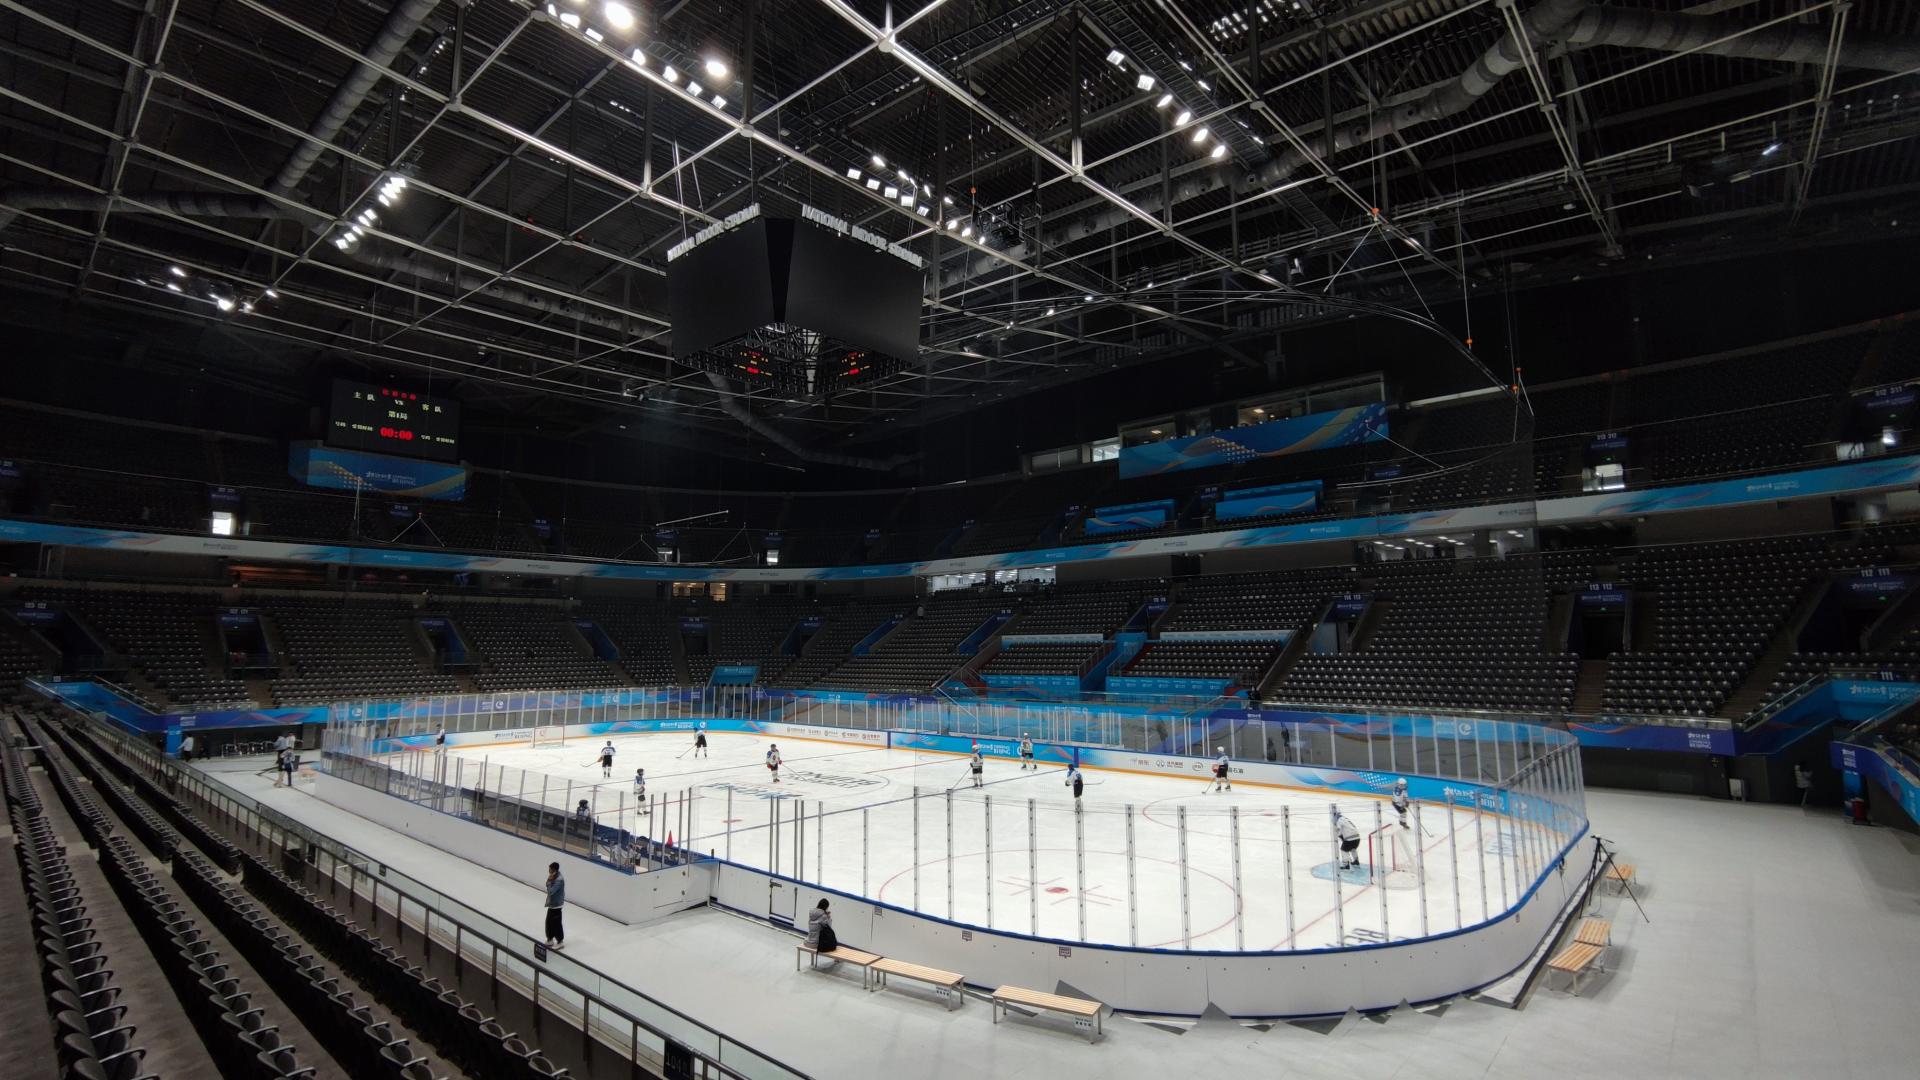 Olympic ice hockey tests underway at Beijing's National Indoor Stadium